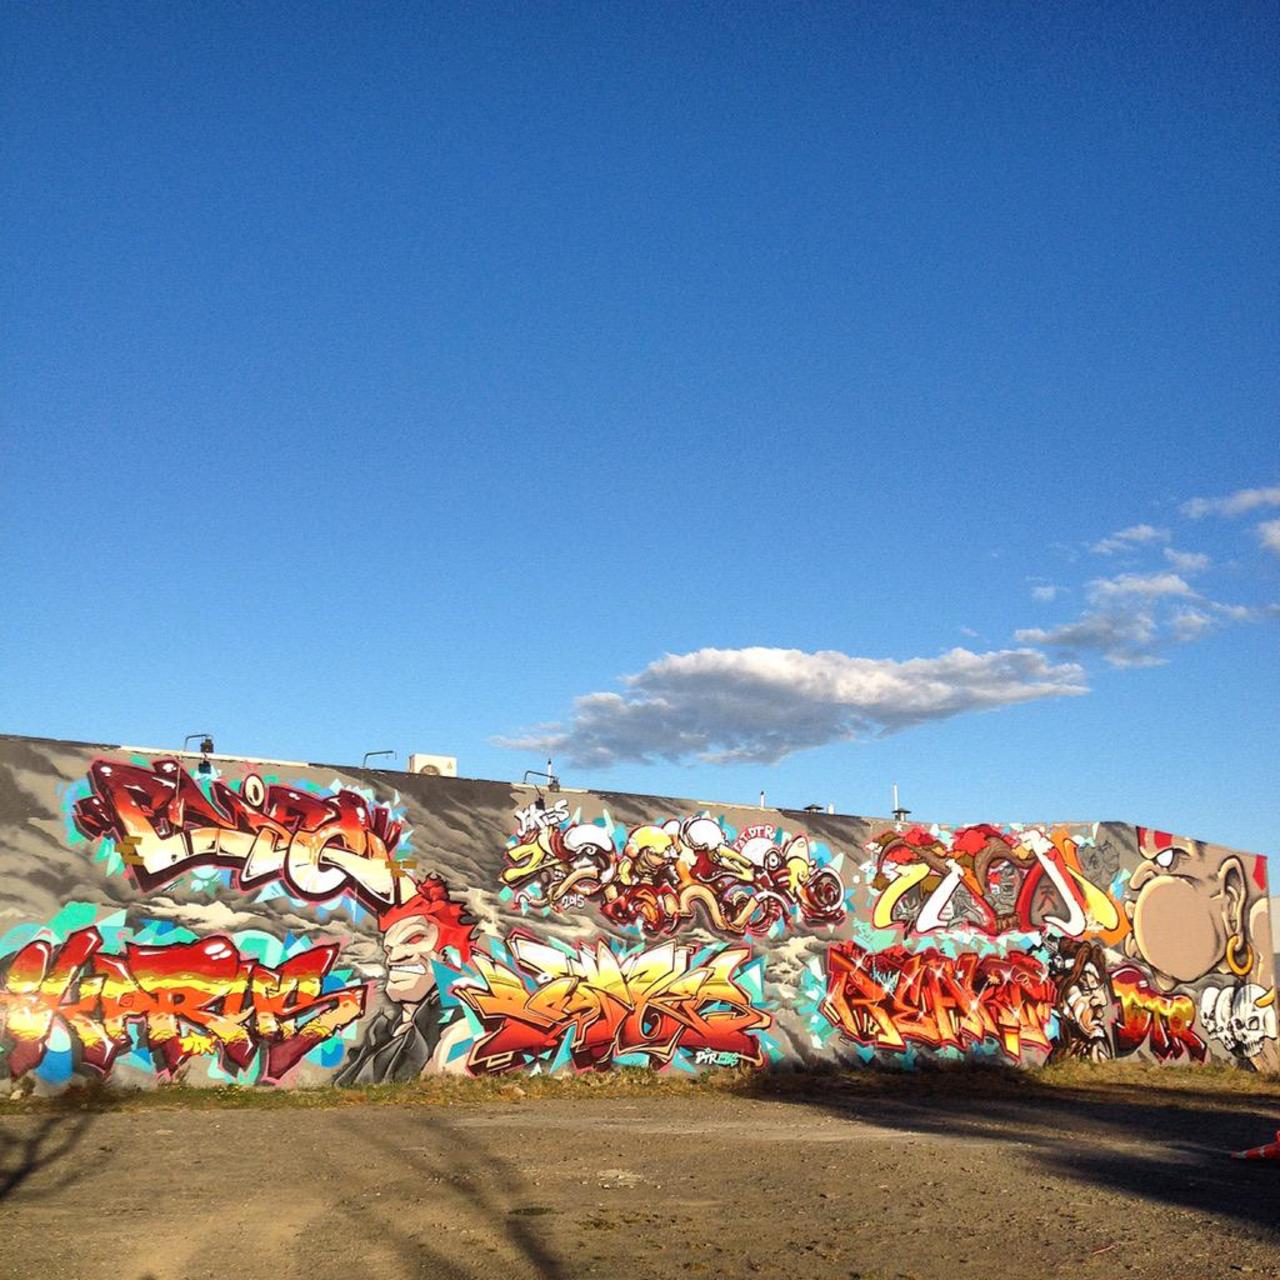 The infamous #dtrcrew smashing in #Christchurch #ikarus #dcypher #JacobYikes #wongifreakwilson #graffiti #streetart http://t.co/xRTwV2rJ33